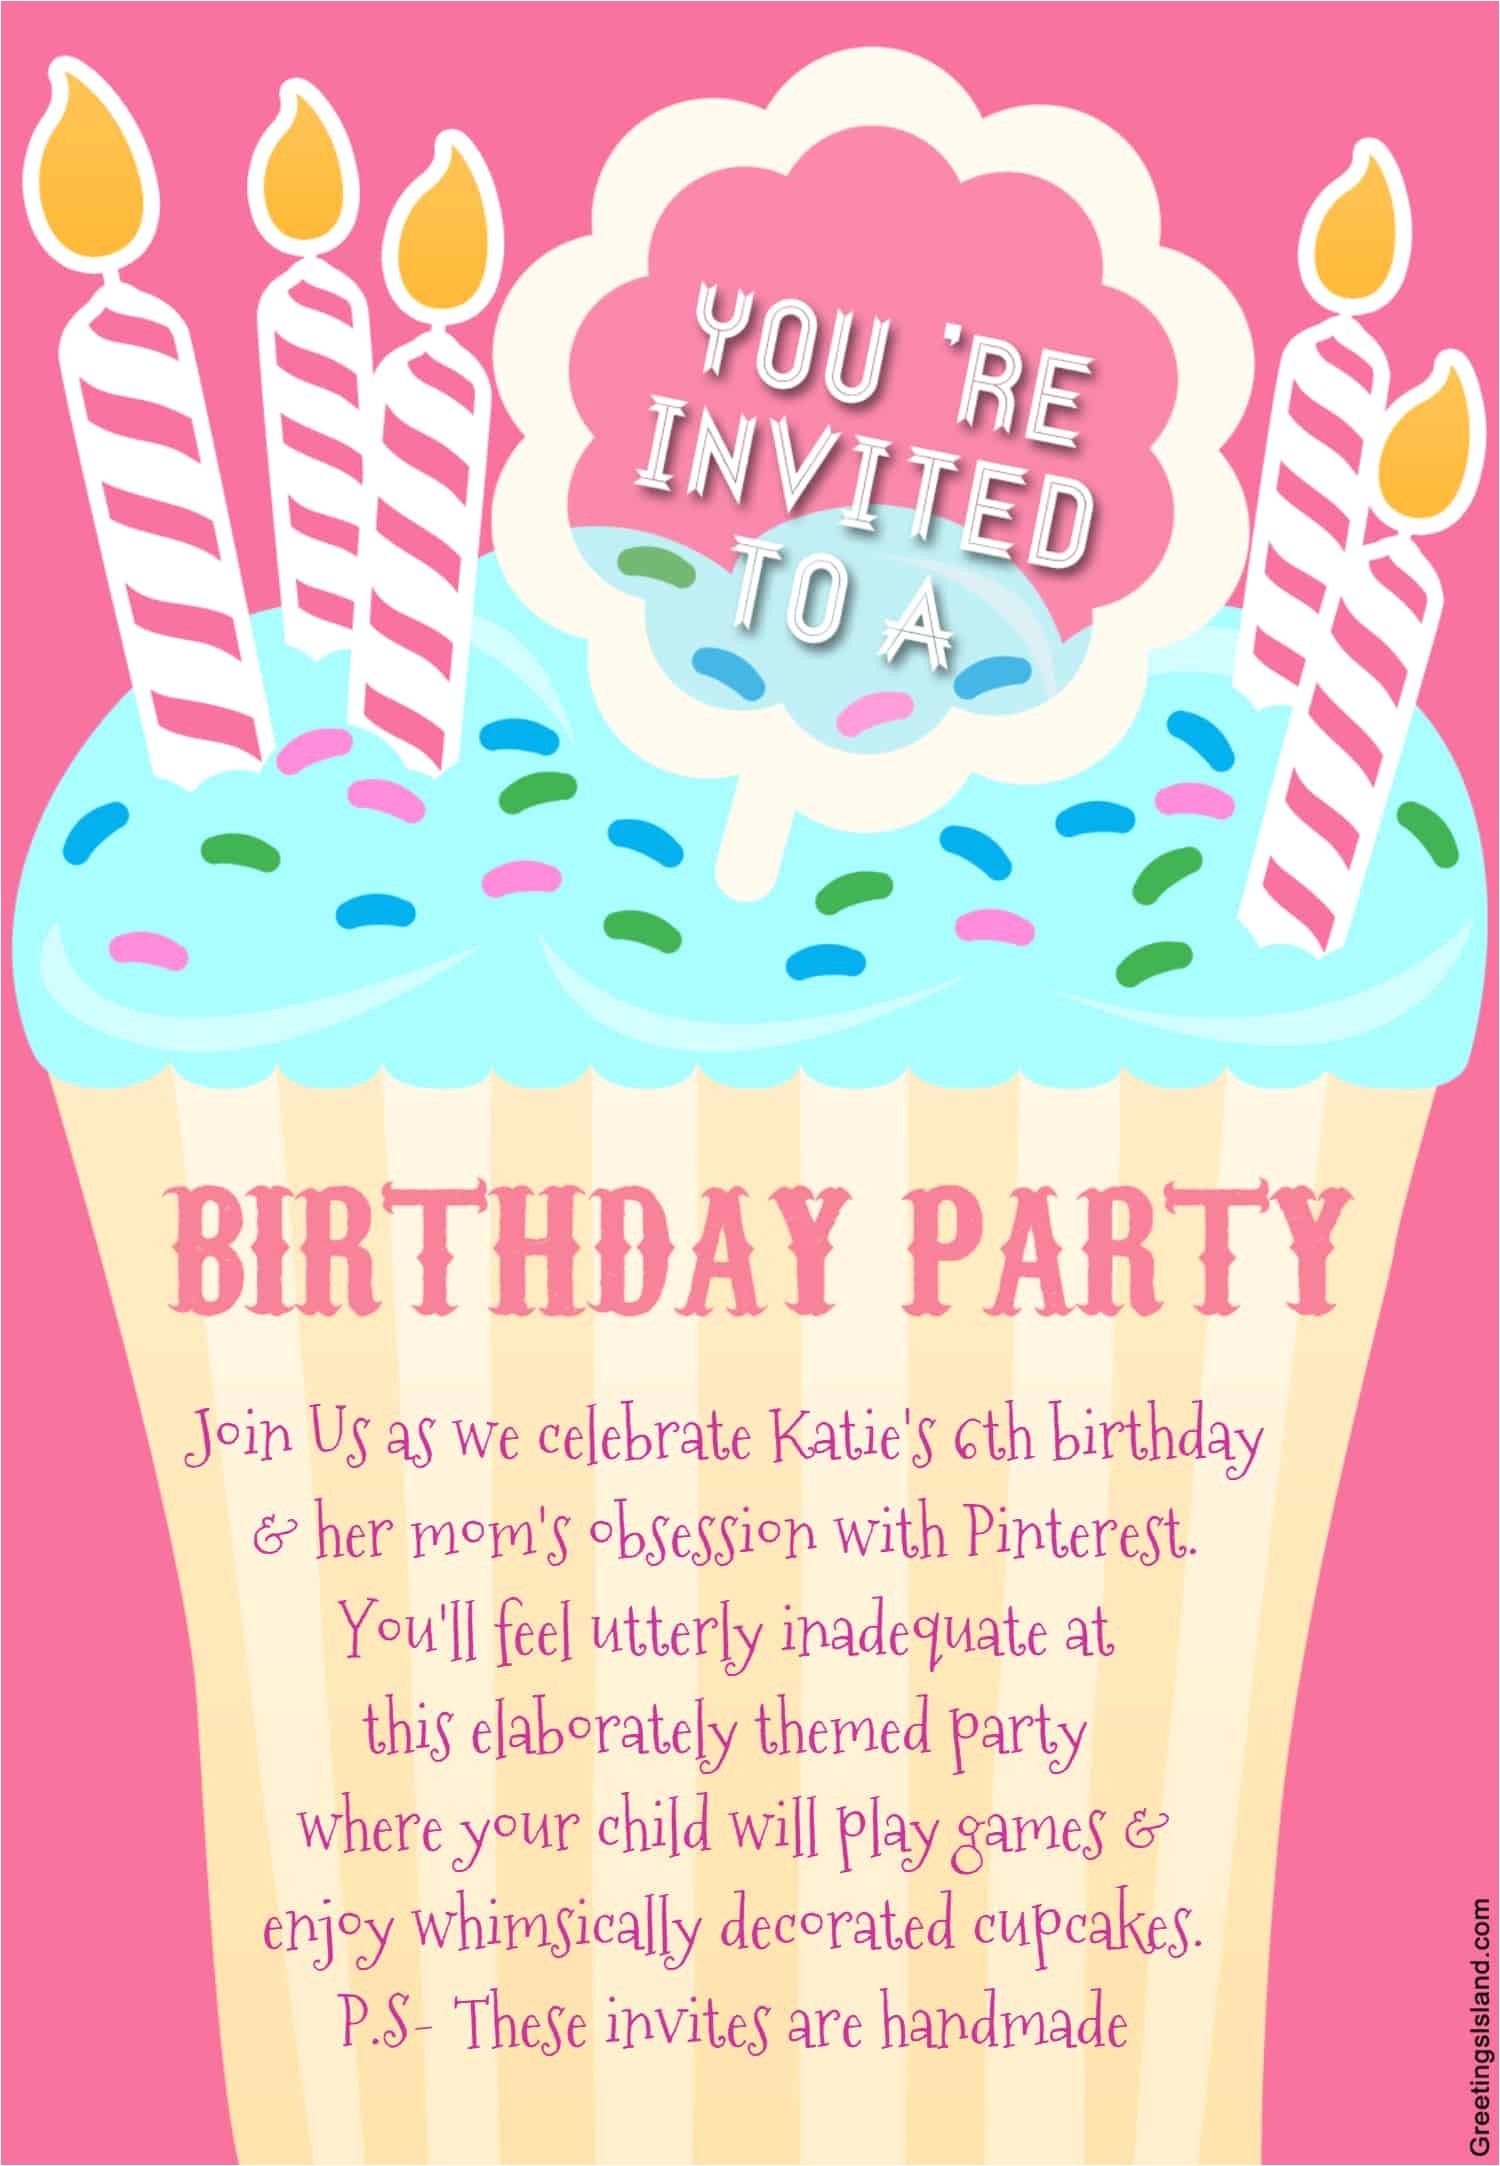 honest birthday party invitations